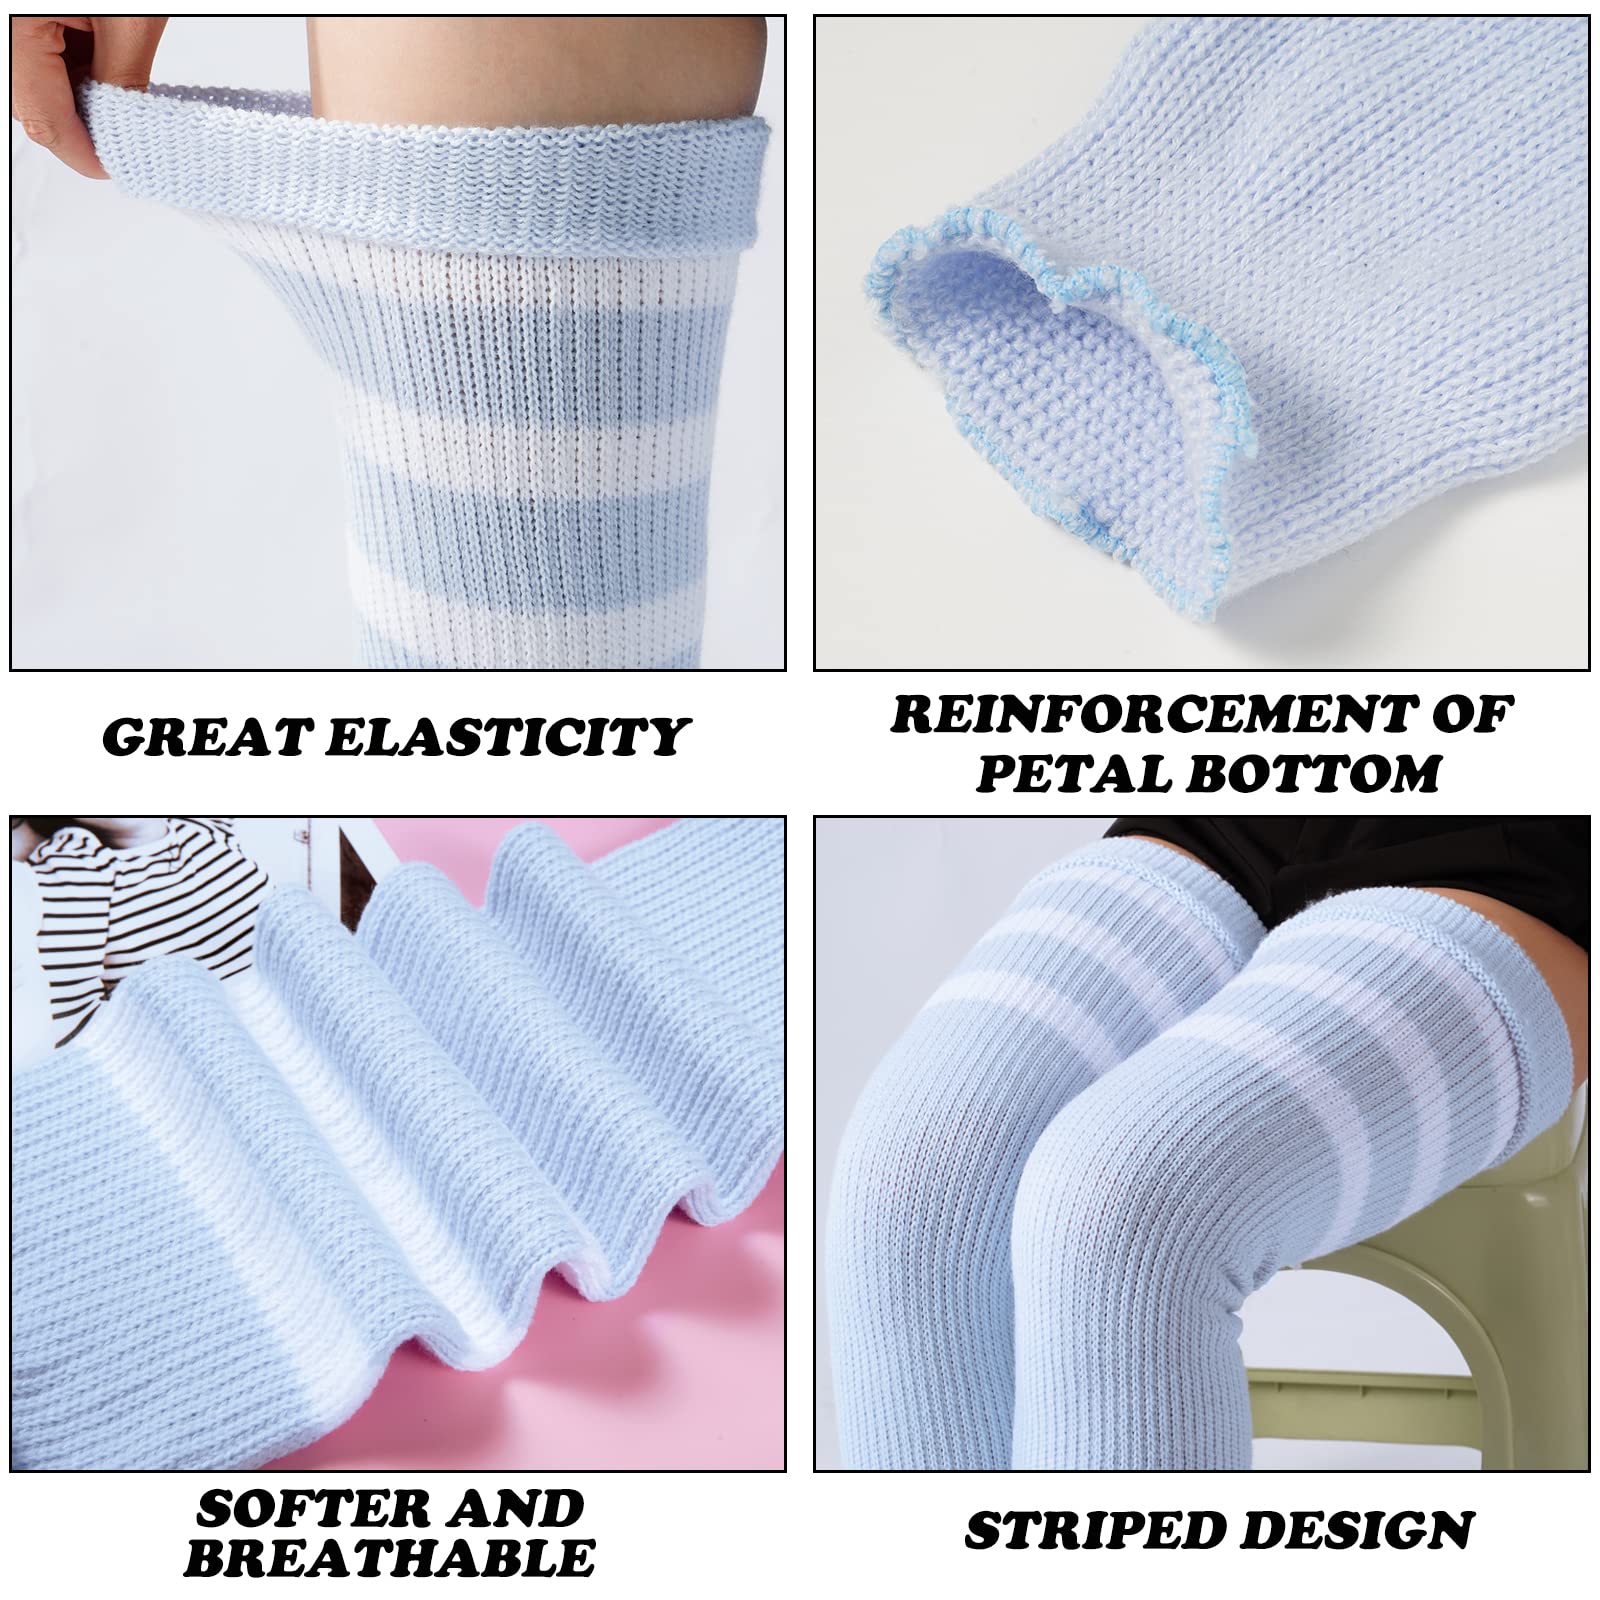 Plus Size Leg Warmers for Women-Baby Blue & White